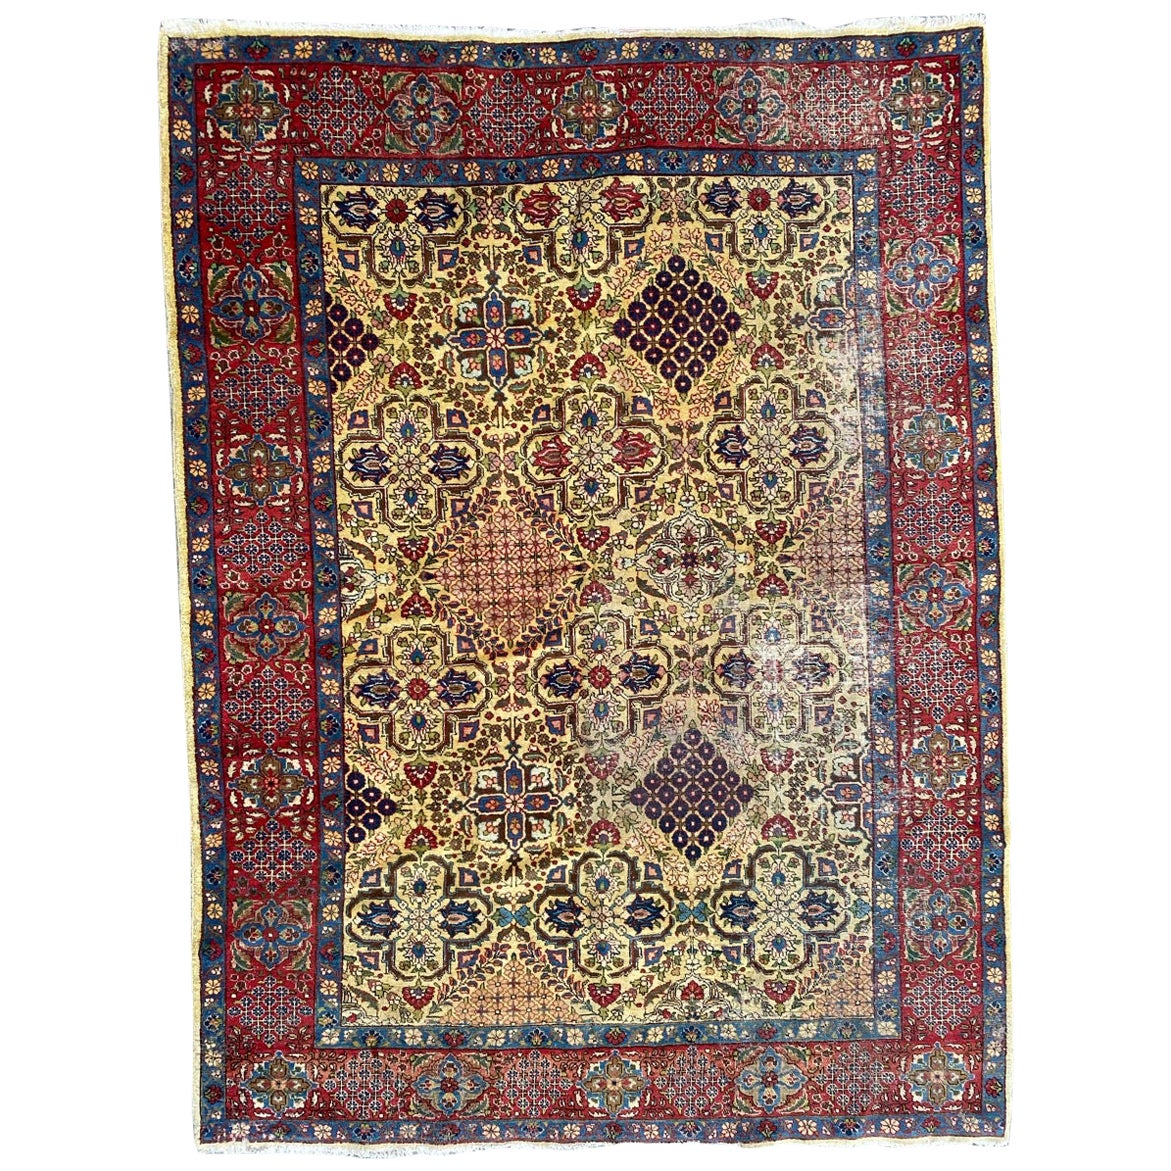 Bobyrug's Nice Antique Tabriz Rug (tapis ancien de Tabriz)